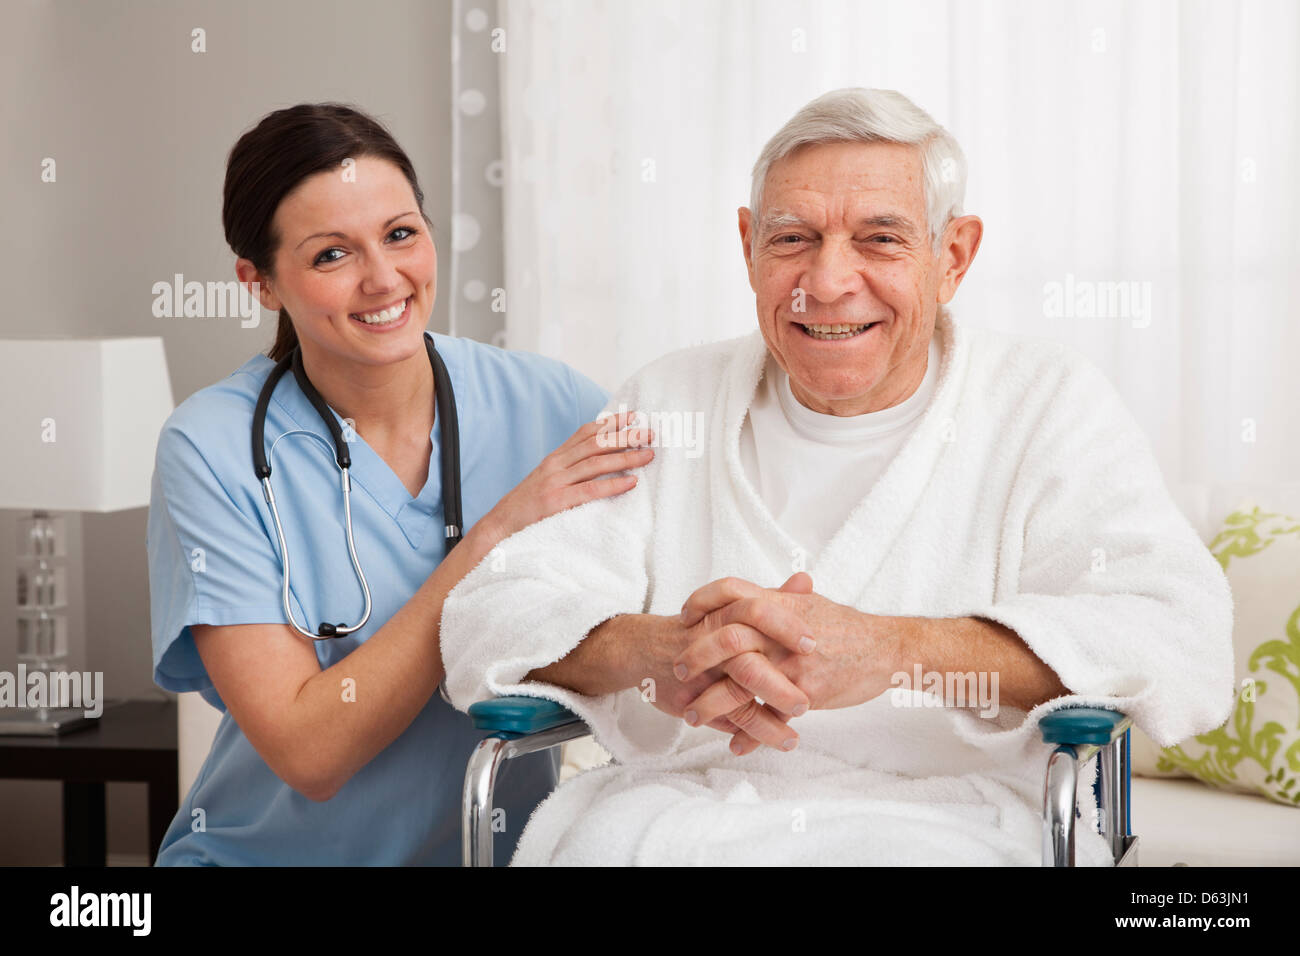 Portrait of nurse with senior patient smiling Stock Photo